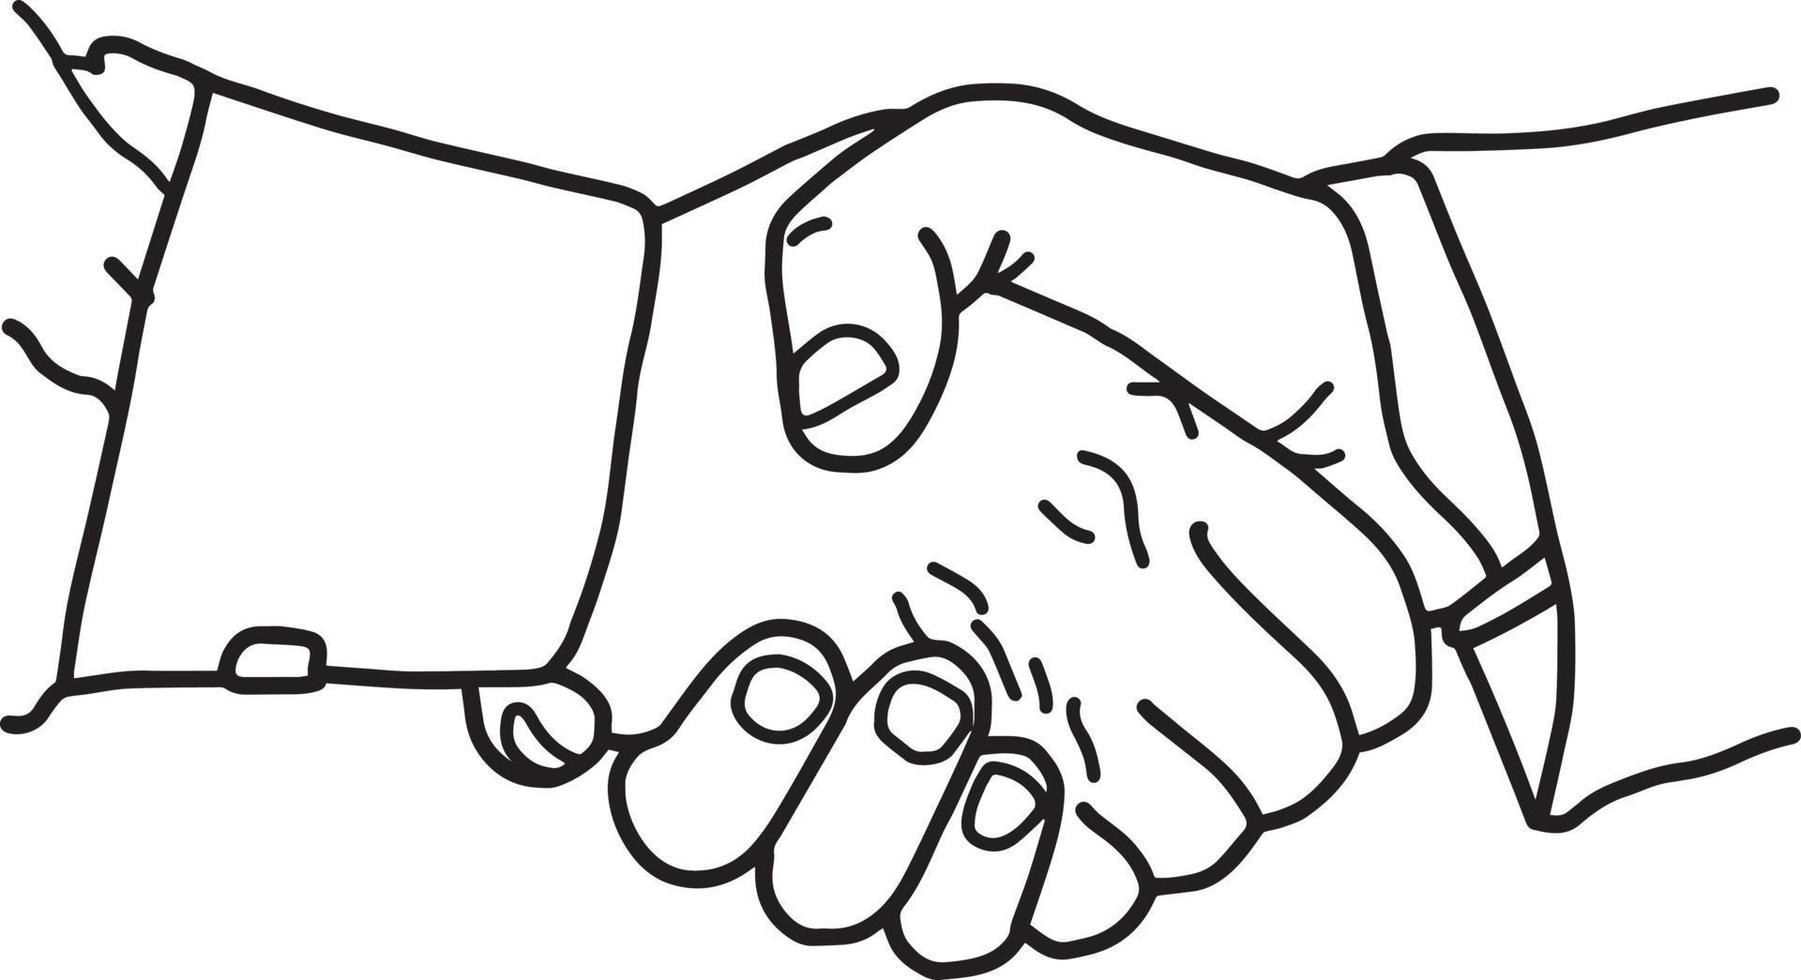 Business Handshake - Vektor-Illustration Skizze handgezeichnete vektor